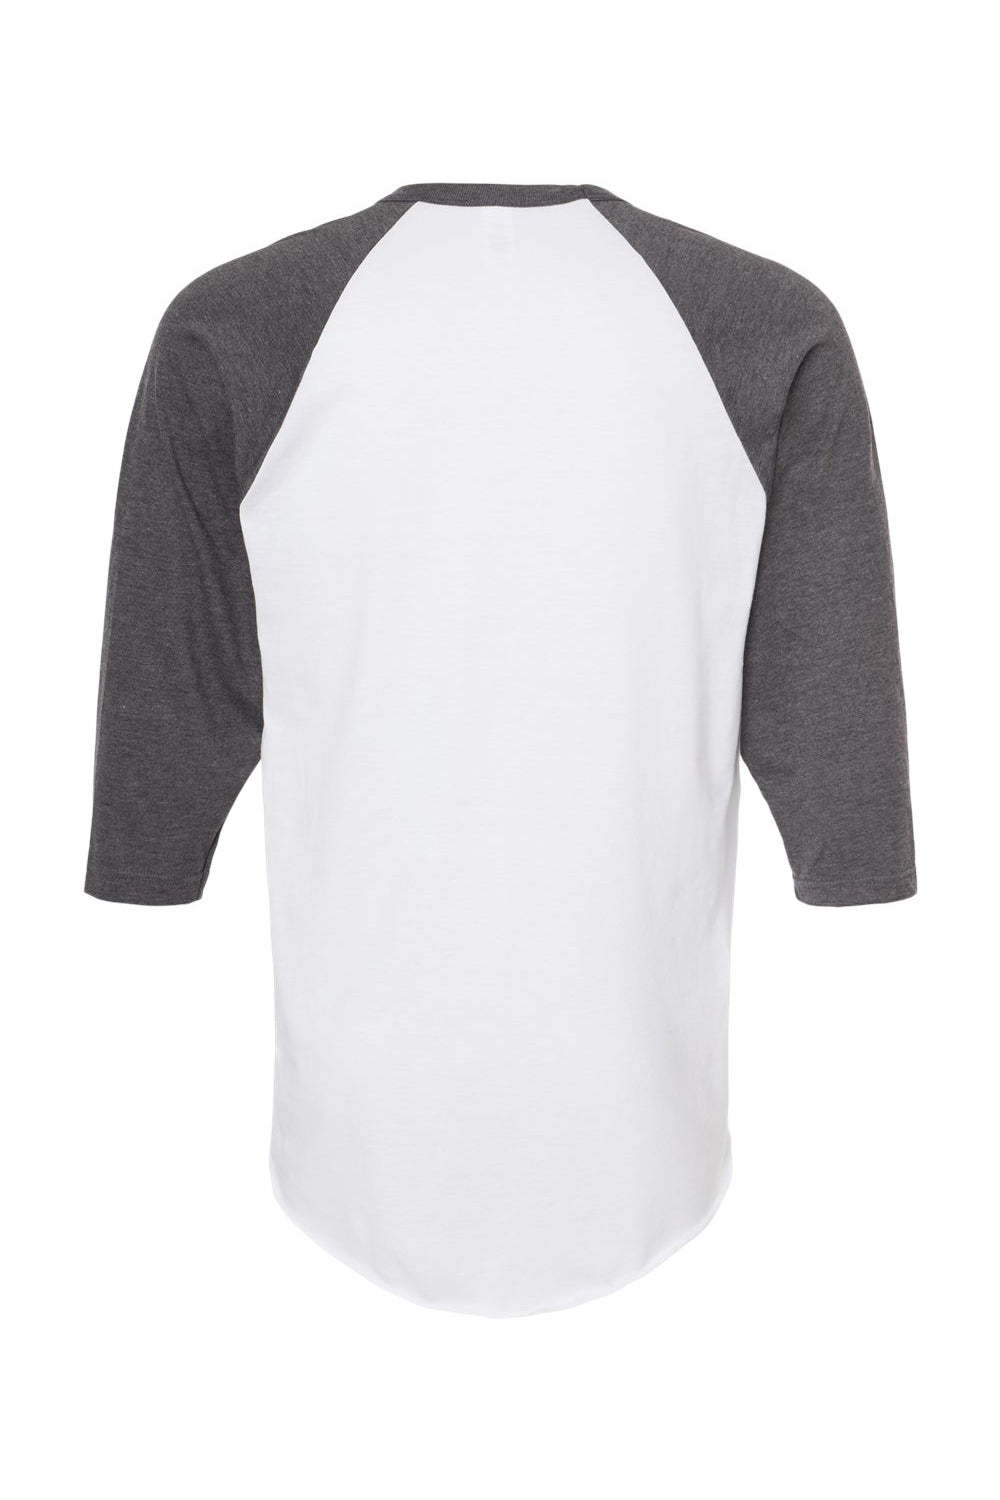 Tultex 245 Mens Fine Jersey Raglan 3/4 Sleeve Crewneck T-Shirt White/Heather Charcoal Grey Flat Back